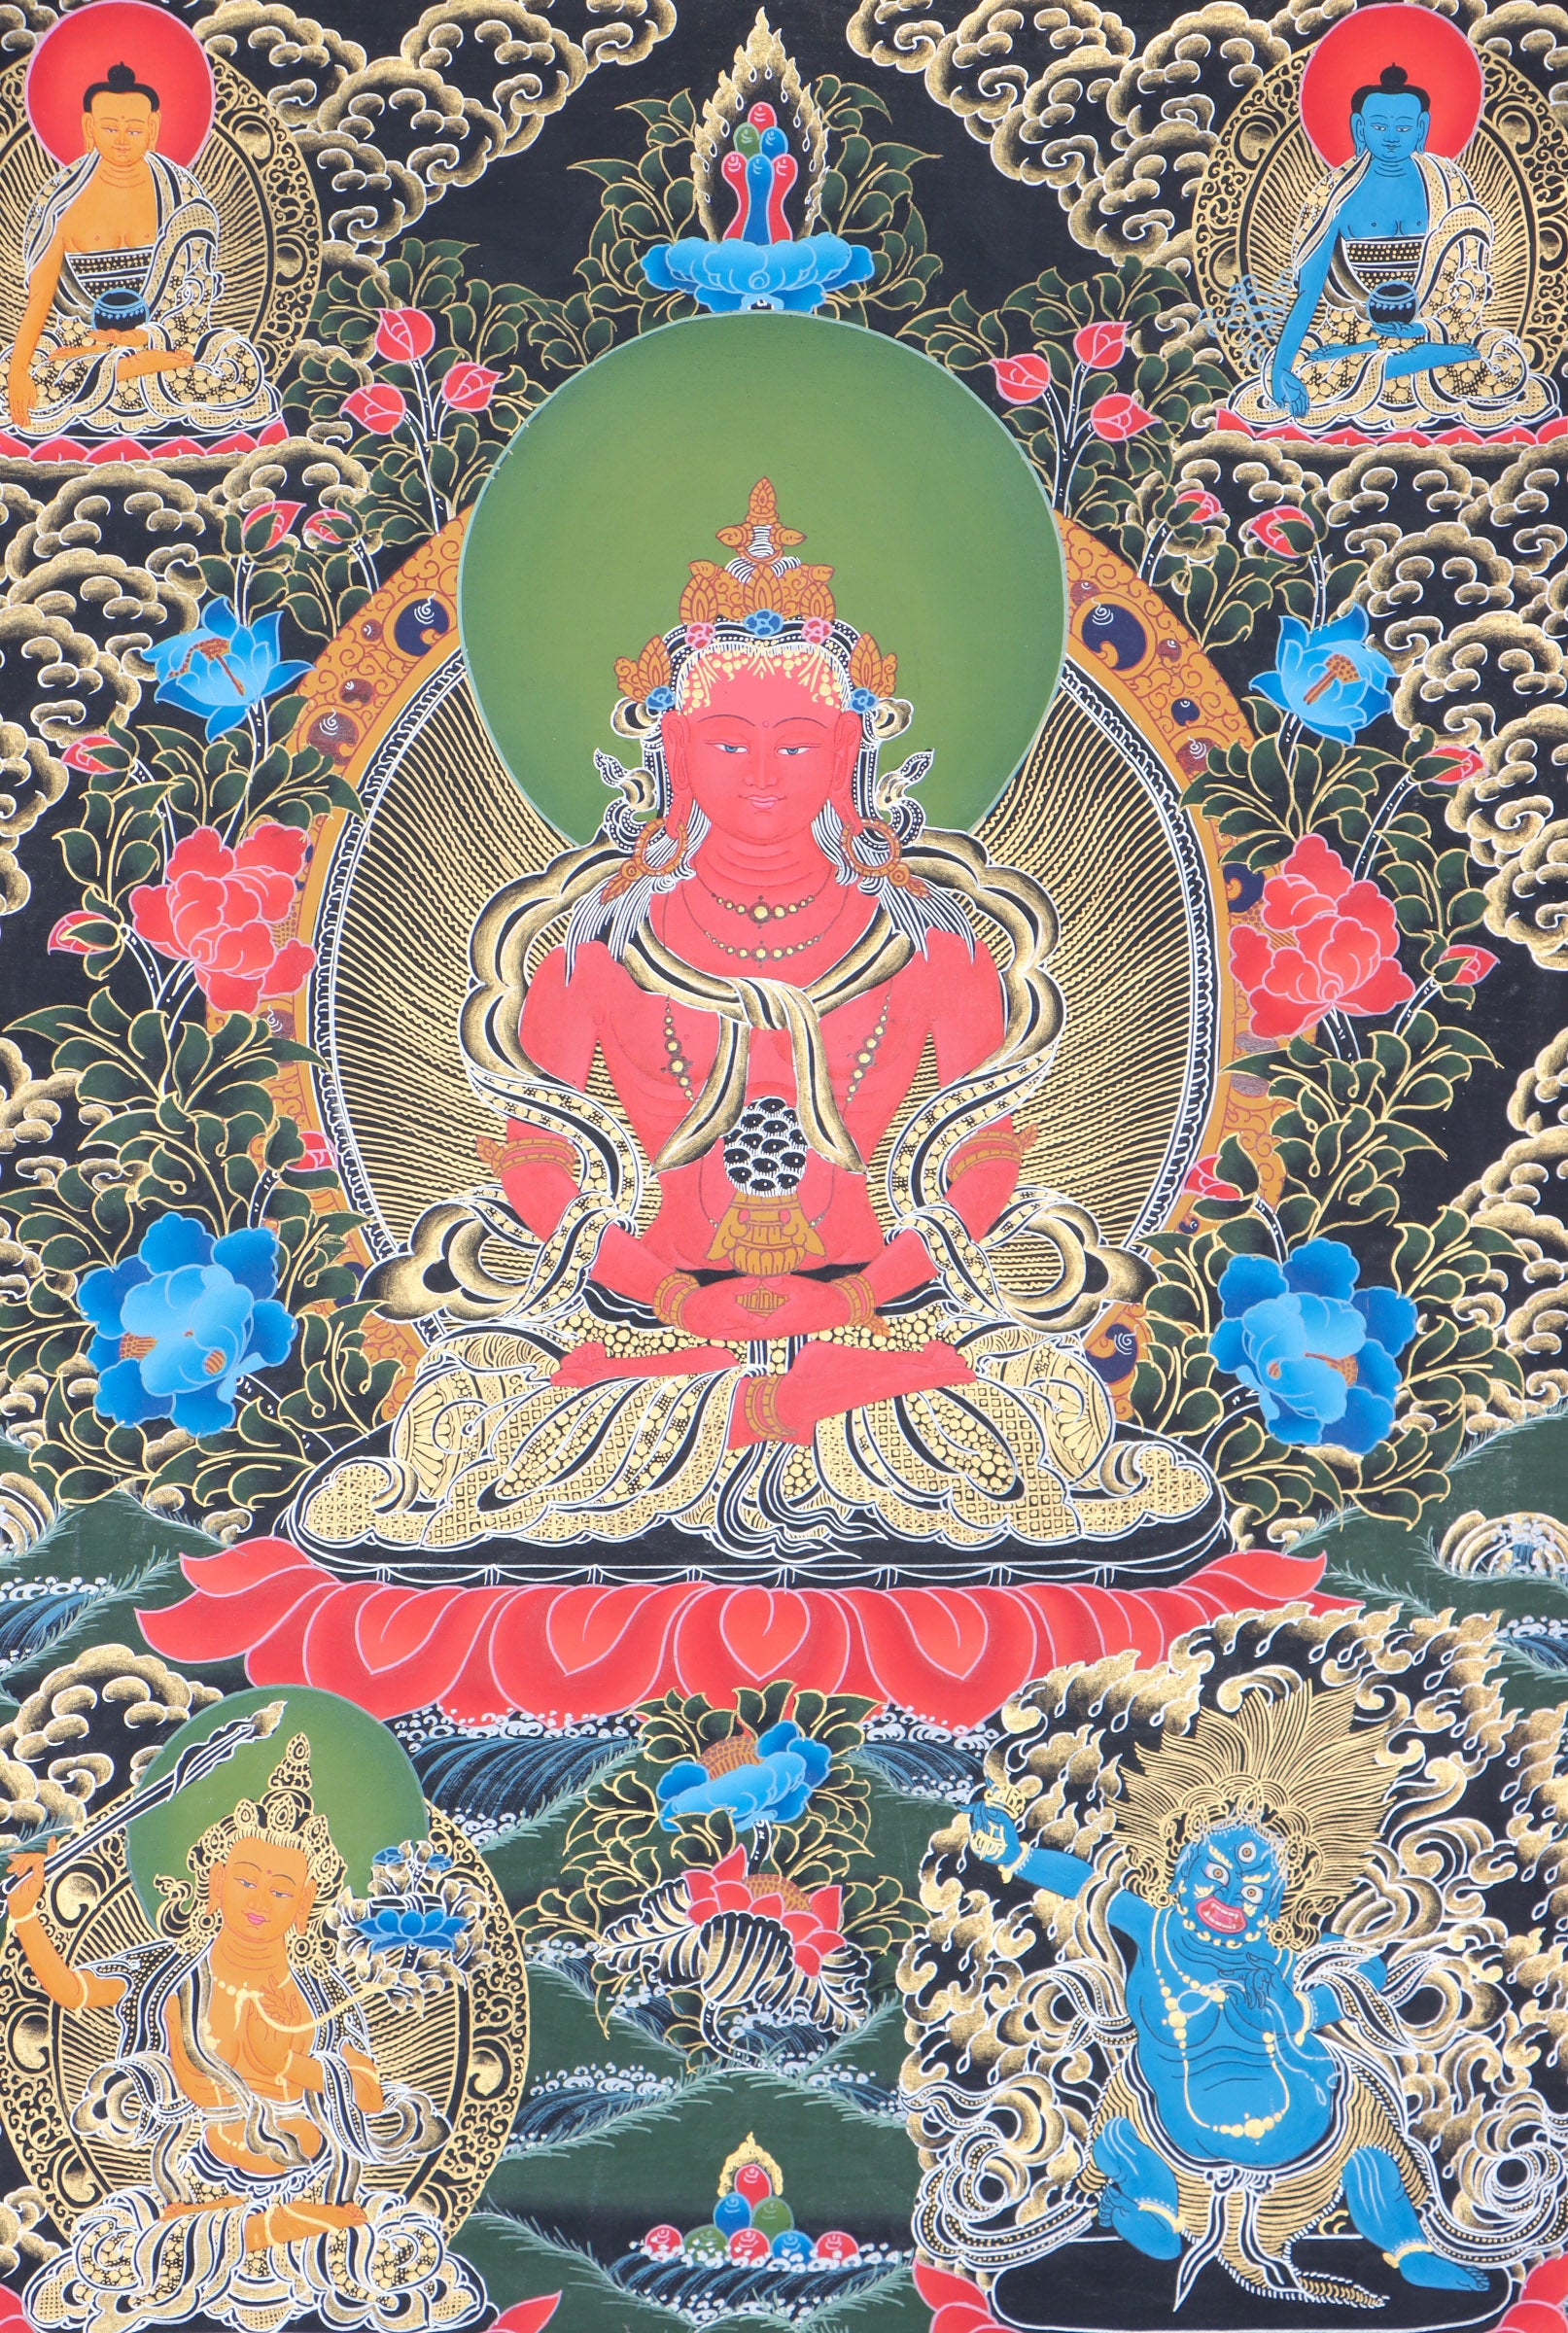 Amitabha Buddha Thangka Painting for wall decor.